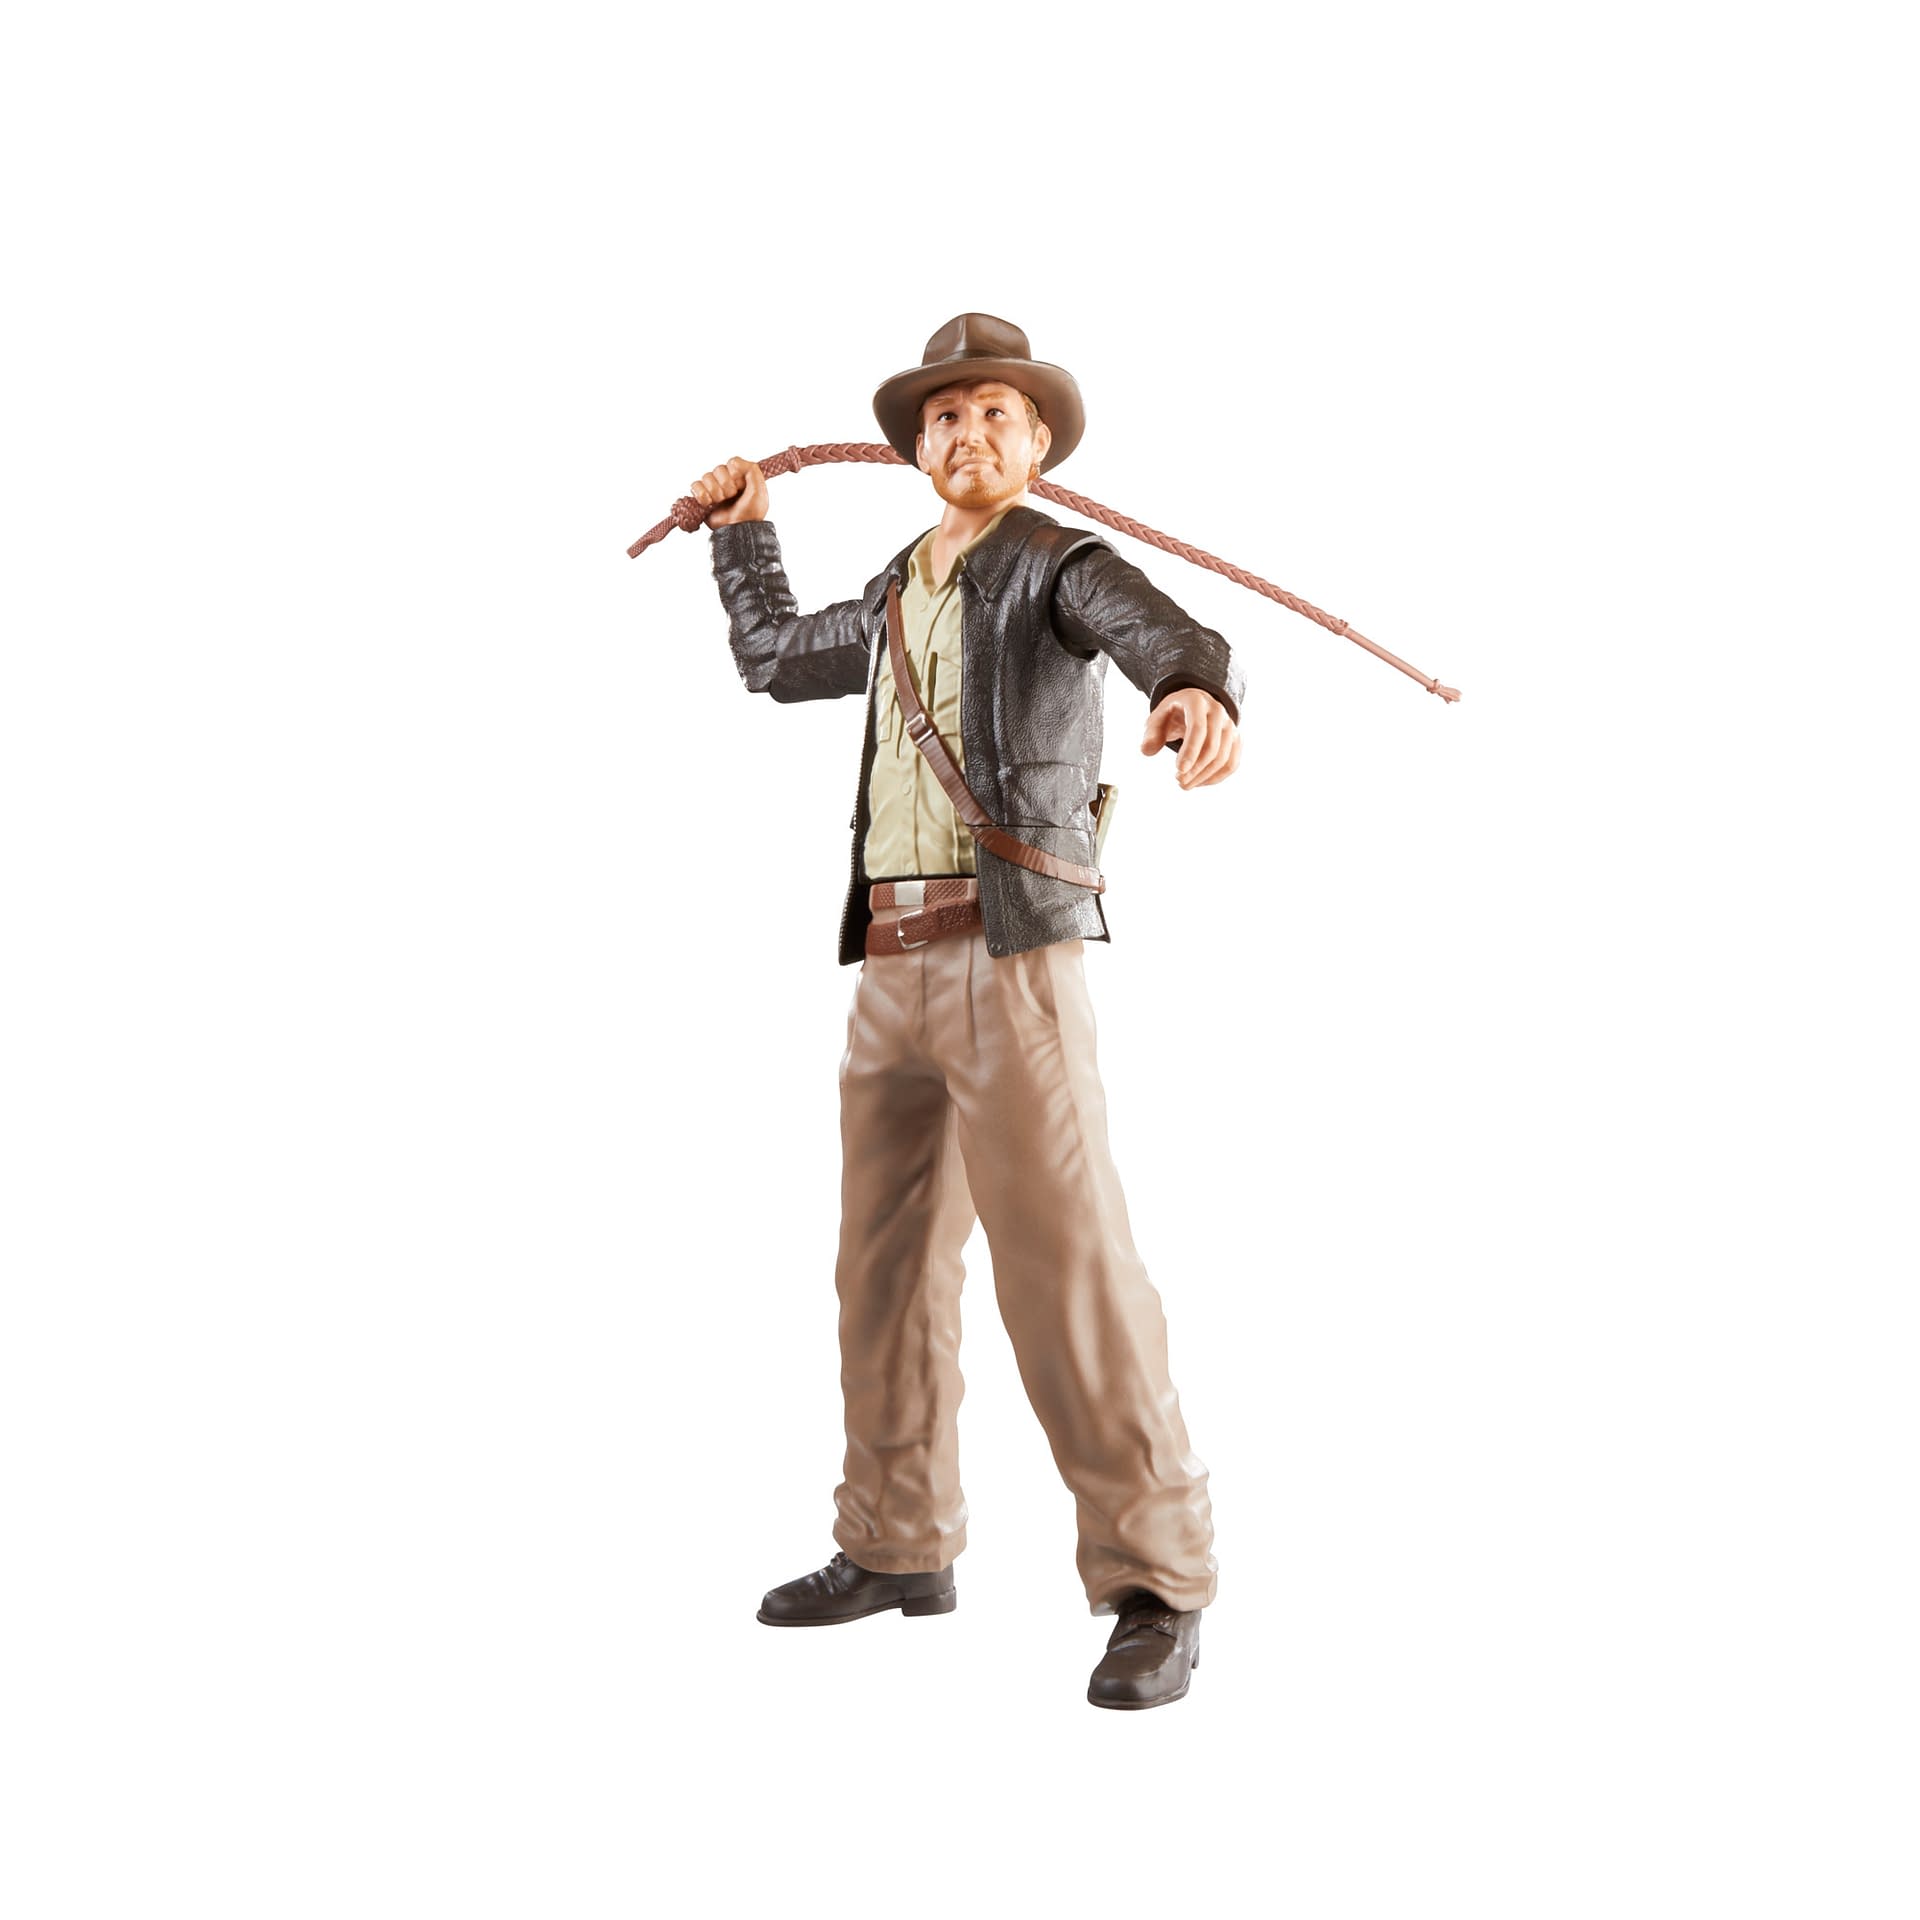 Adventures Awaits with Hasbro's New Indiana Jones Kid Collectibles